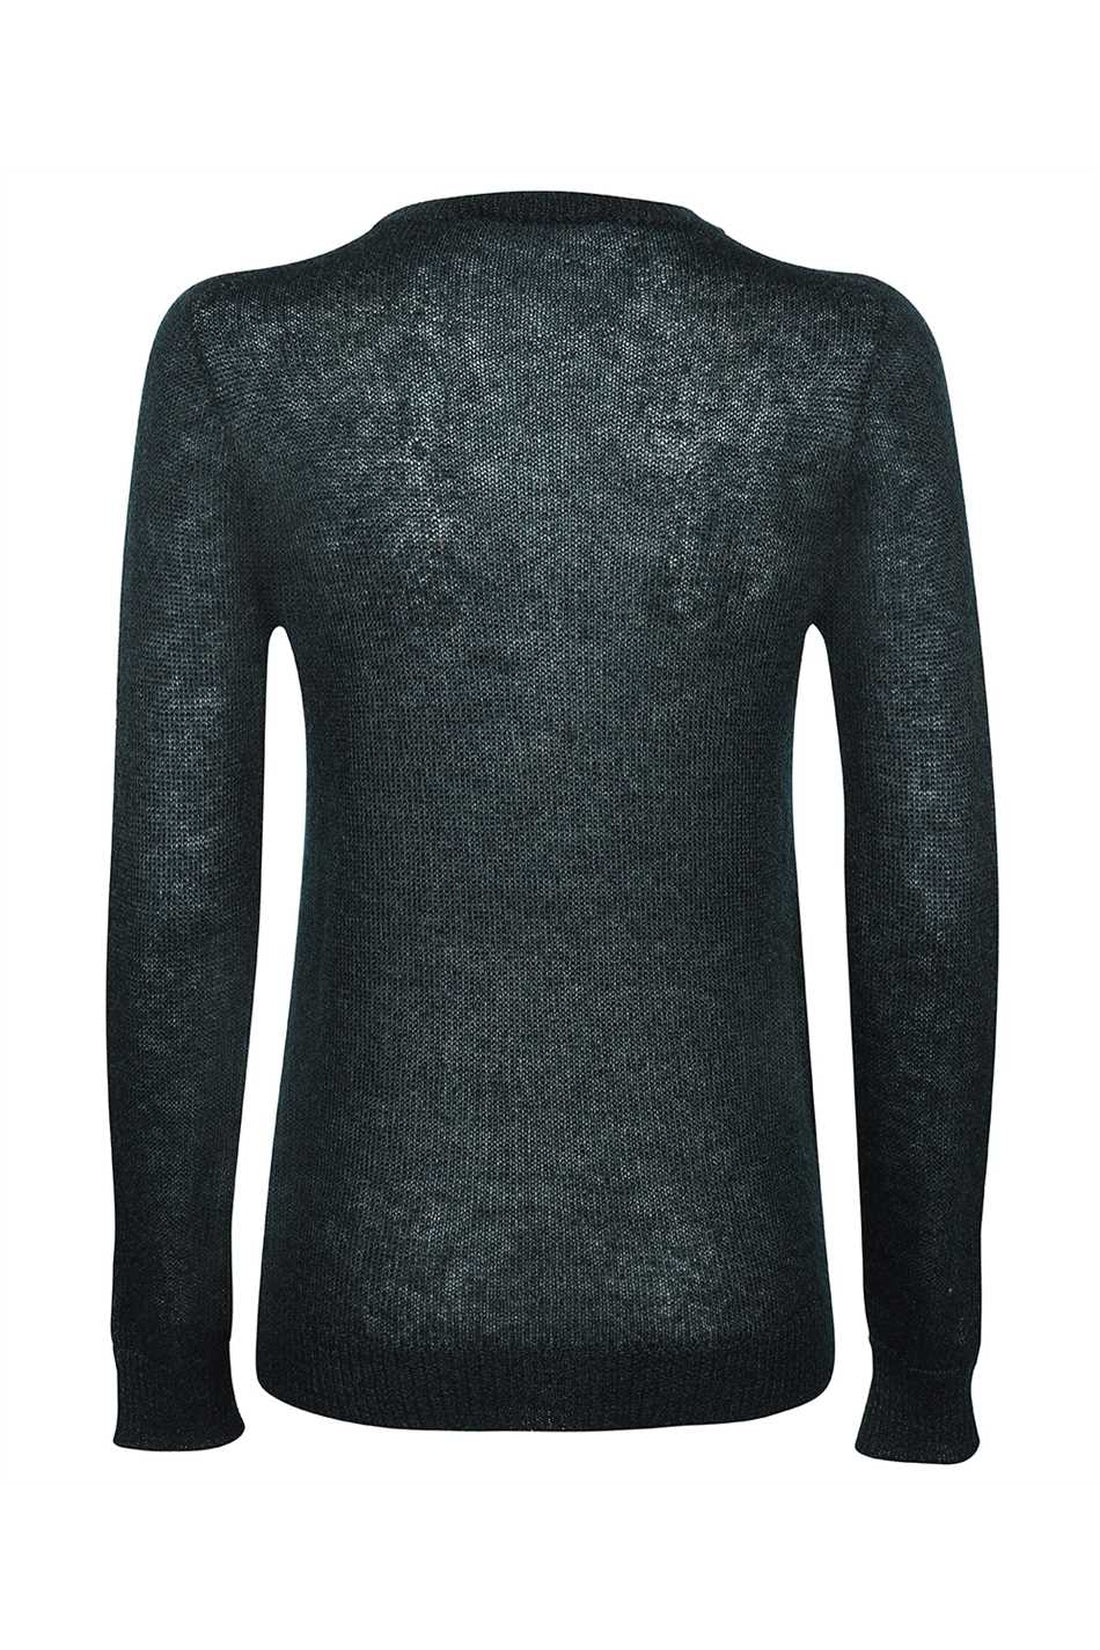 Max Mara-OUTLET-SALE-Chantal mohair blend sweater-ARCHIVIST